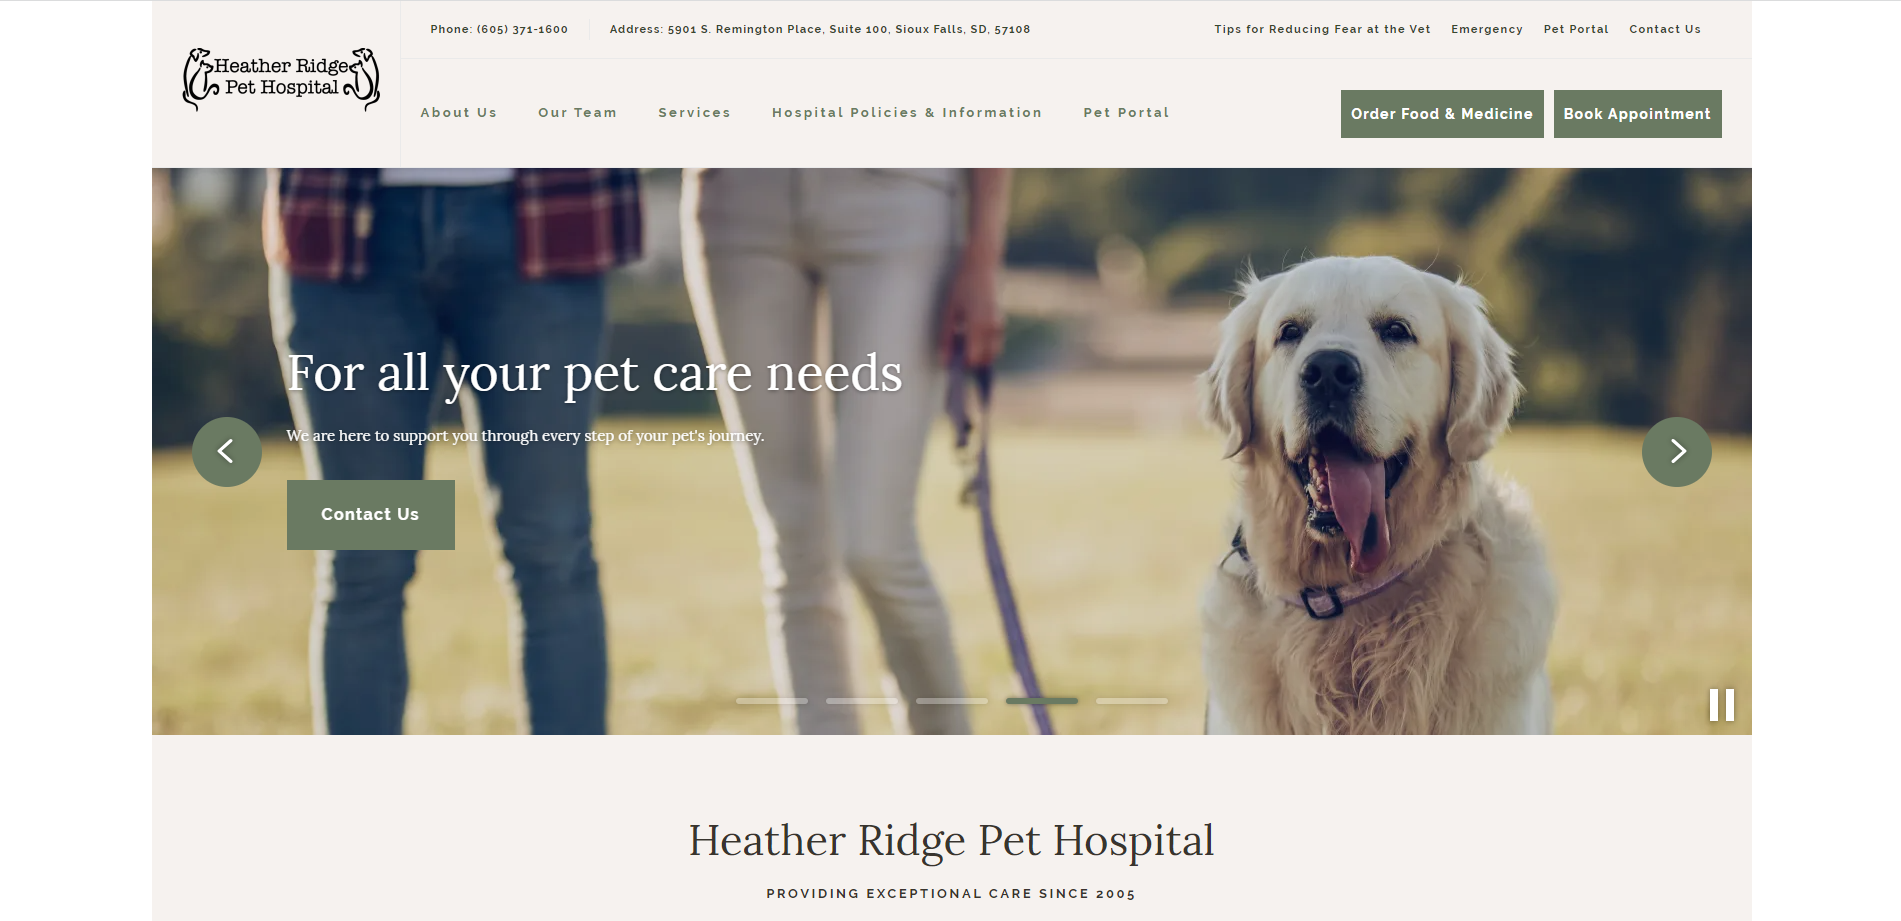 Heather Ridgecy
Pet Hospital

      

Contact Us

Heather Ridge Pet Hospital

PROVIDING EXCEPTIONAL CARE SINCE 2008